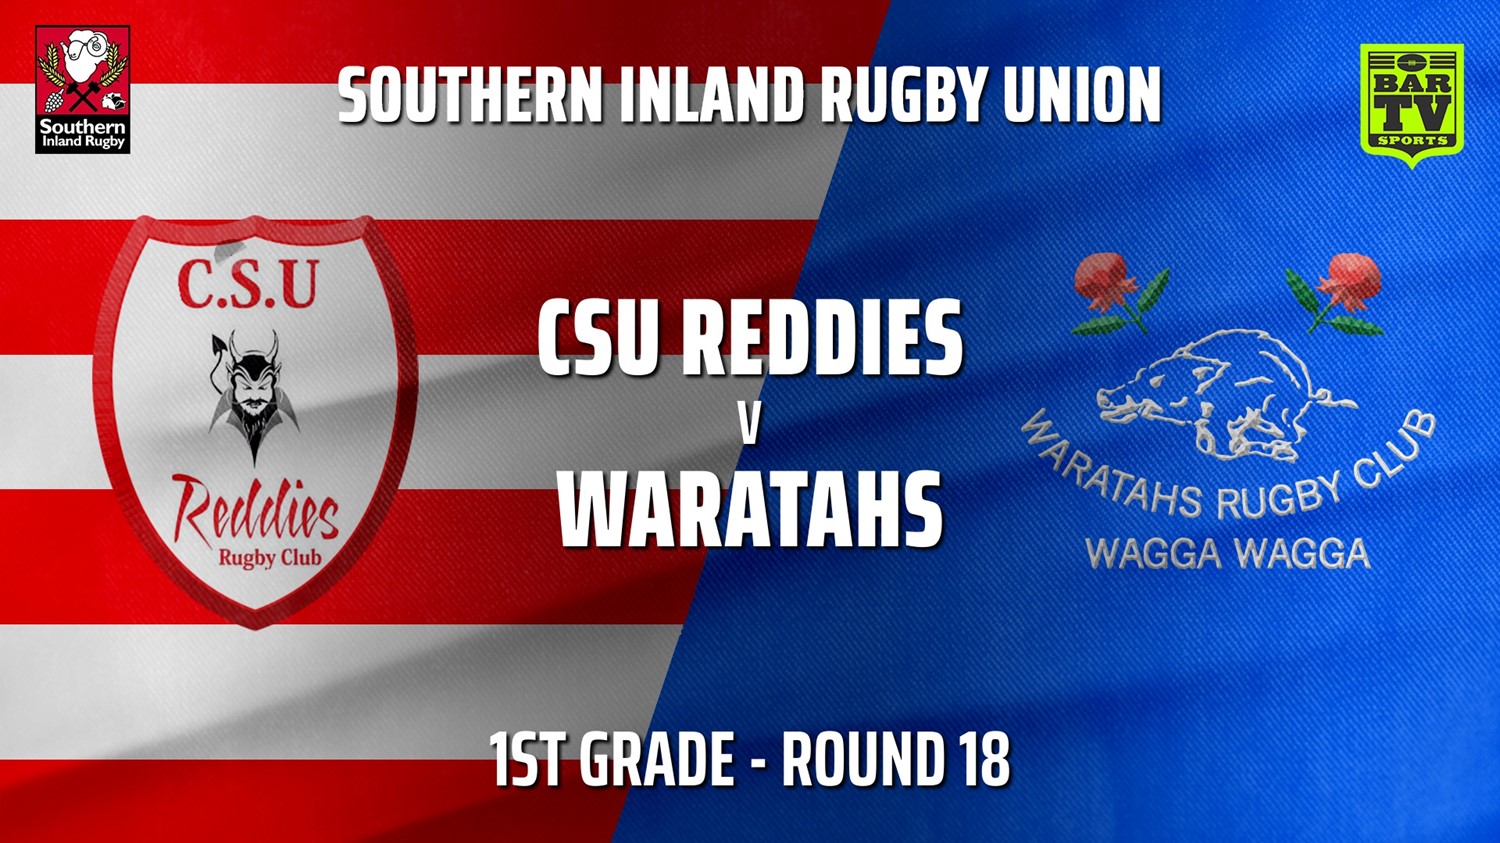 210814-Southern Inland Rugby Union Round 18 - 1st Grade - CSU Reddies v Wagga Waratahs Minigame Slate Image